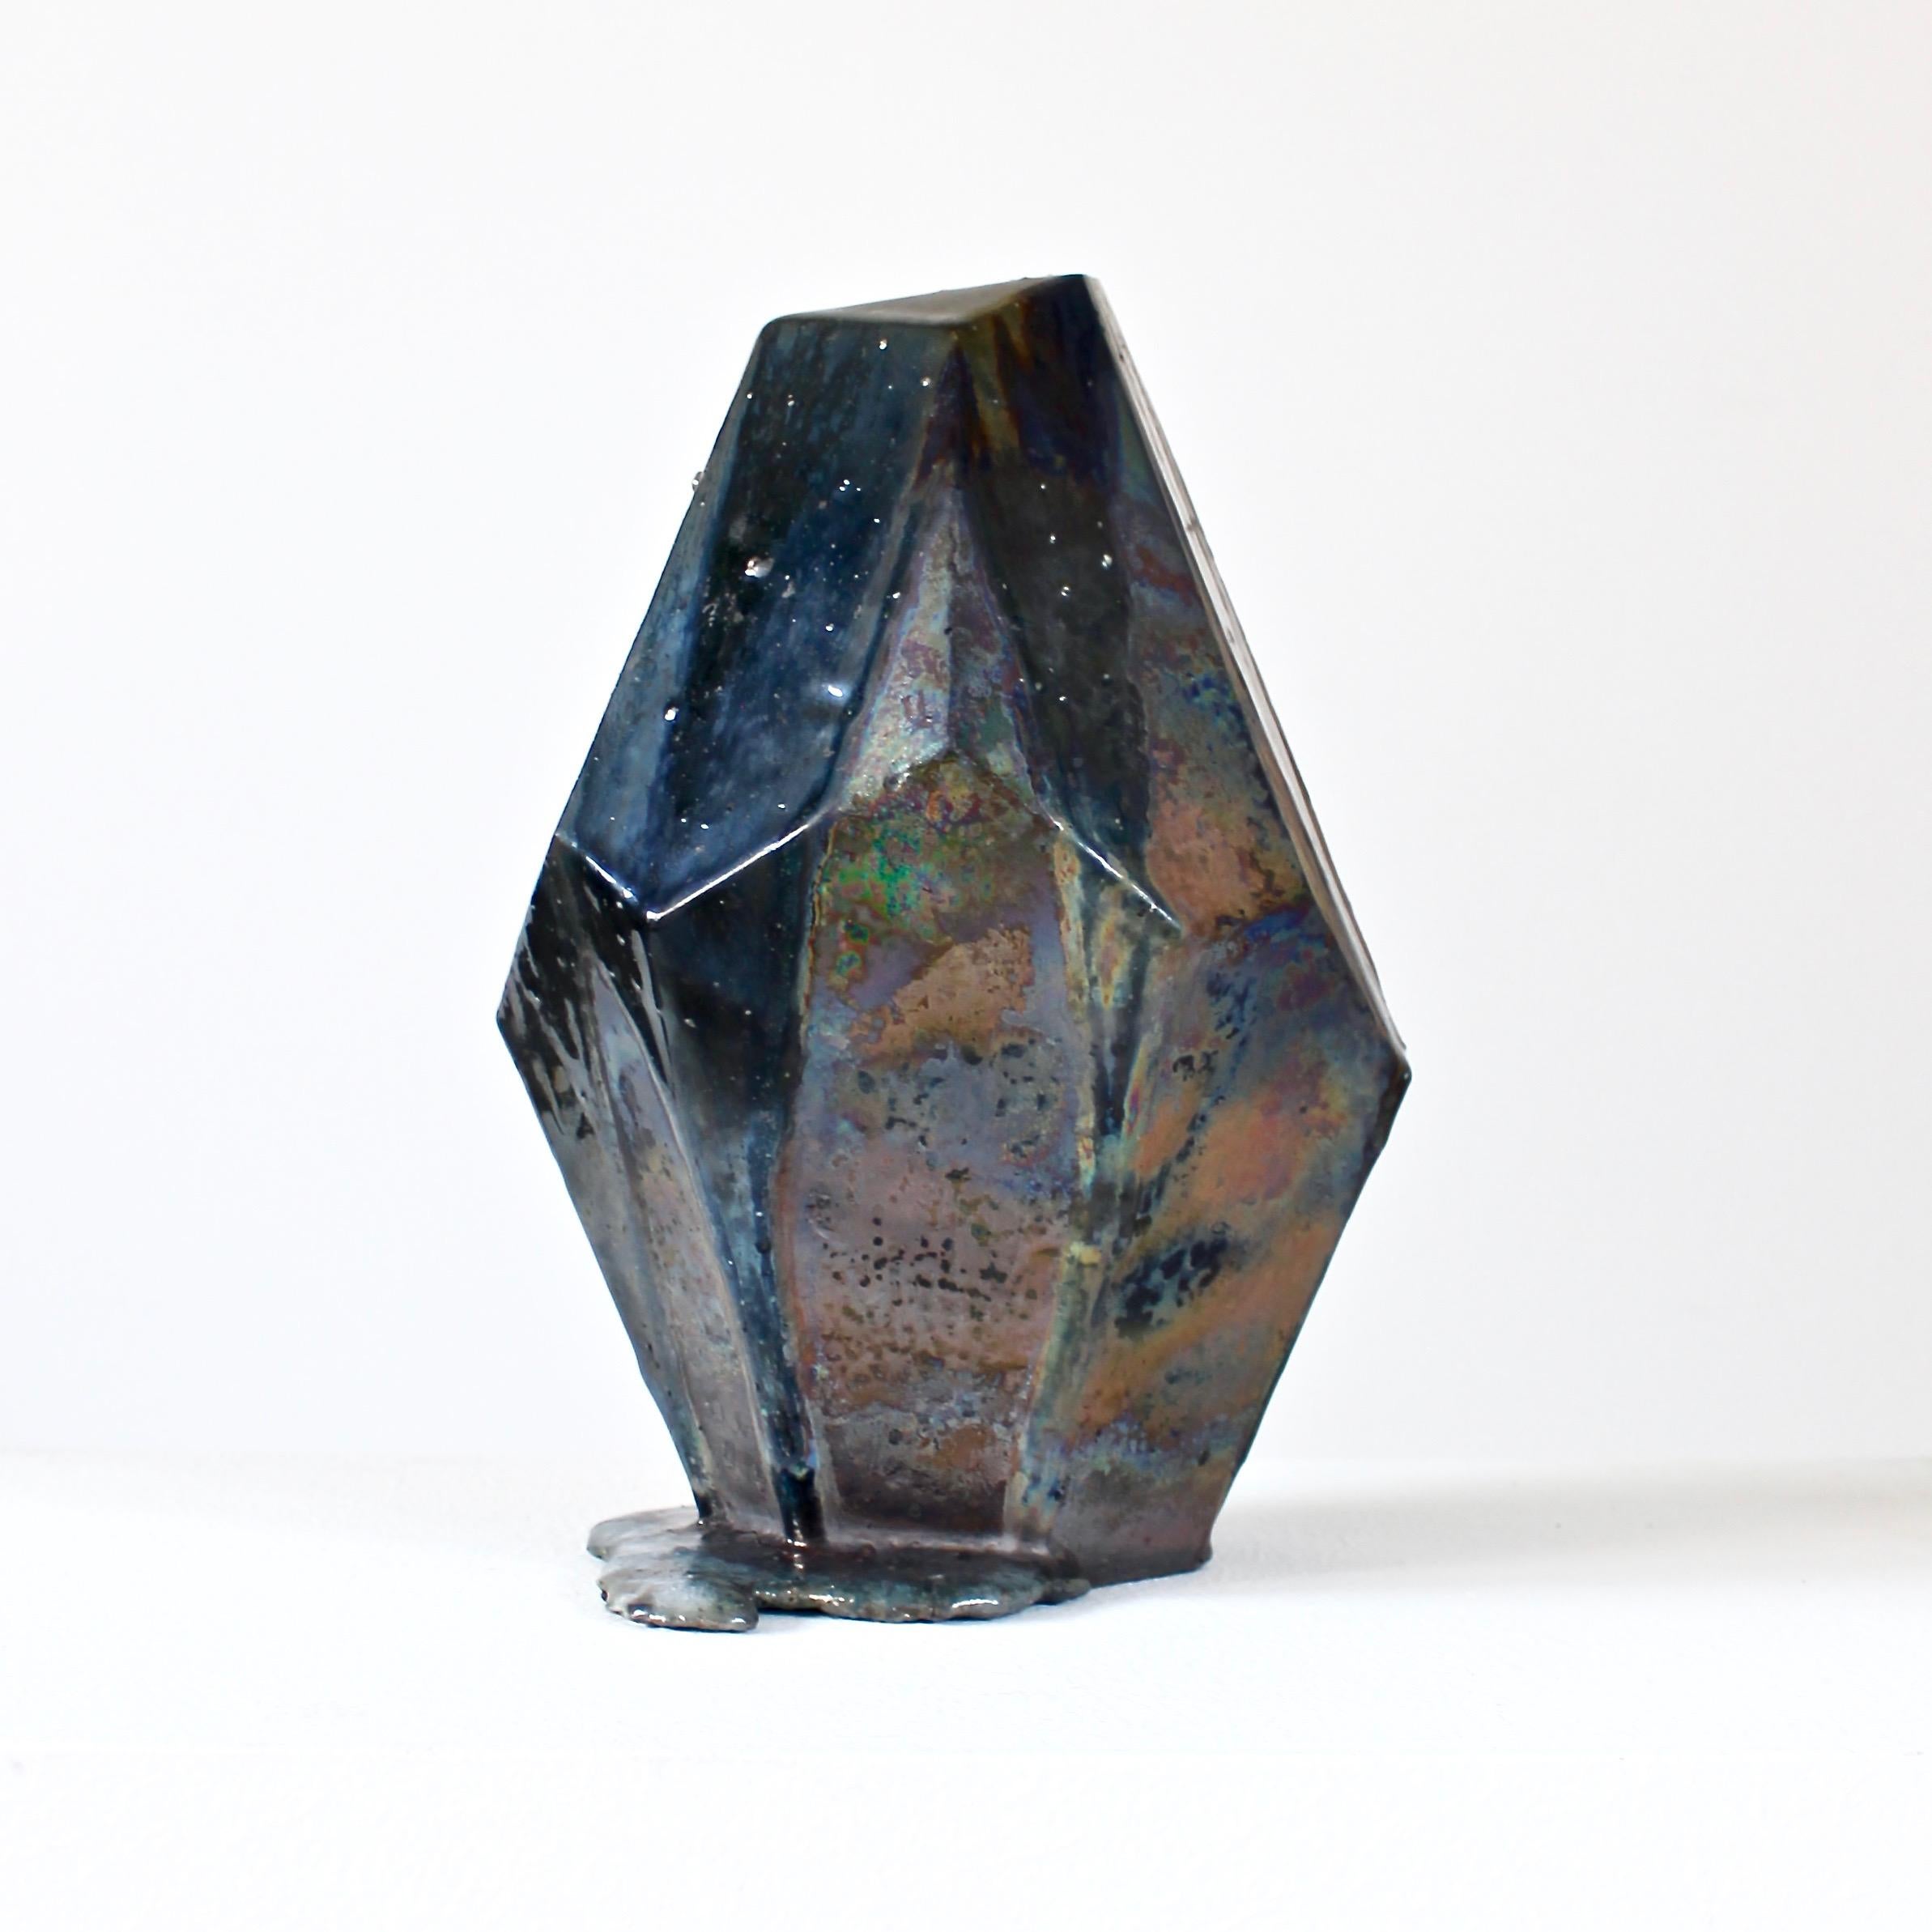 Sculptural ceramic handmade by Tomonari Hashimoto
Dimensions: W 23 x D 20 x H 30 cm
Materials: Stoneware cray, oxide metal, glaze


1990 Born in Wakayama Pref. in Japan
2017 PhD, Kanazawa University of Art
In 2008, he entered the Kyoto